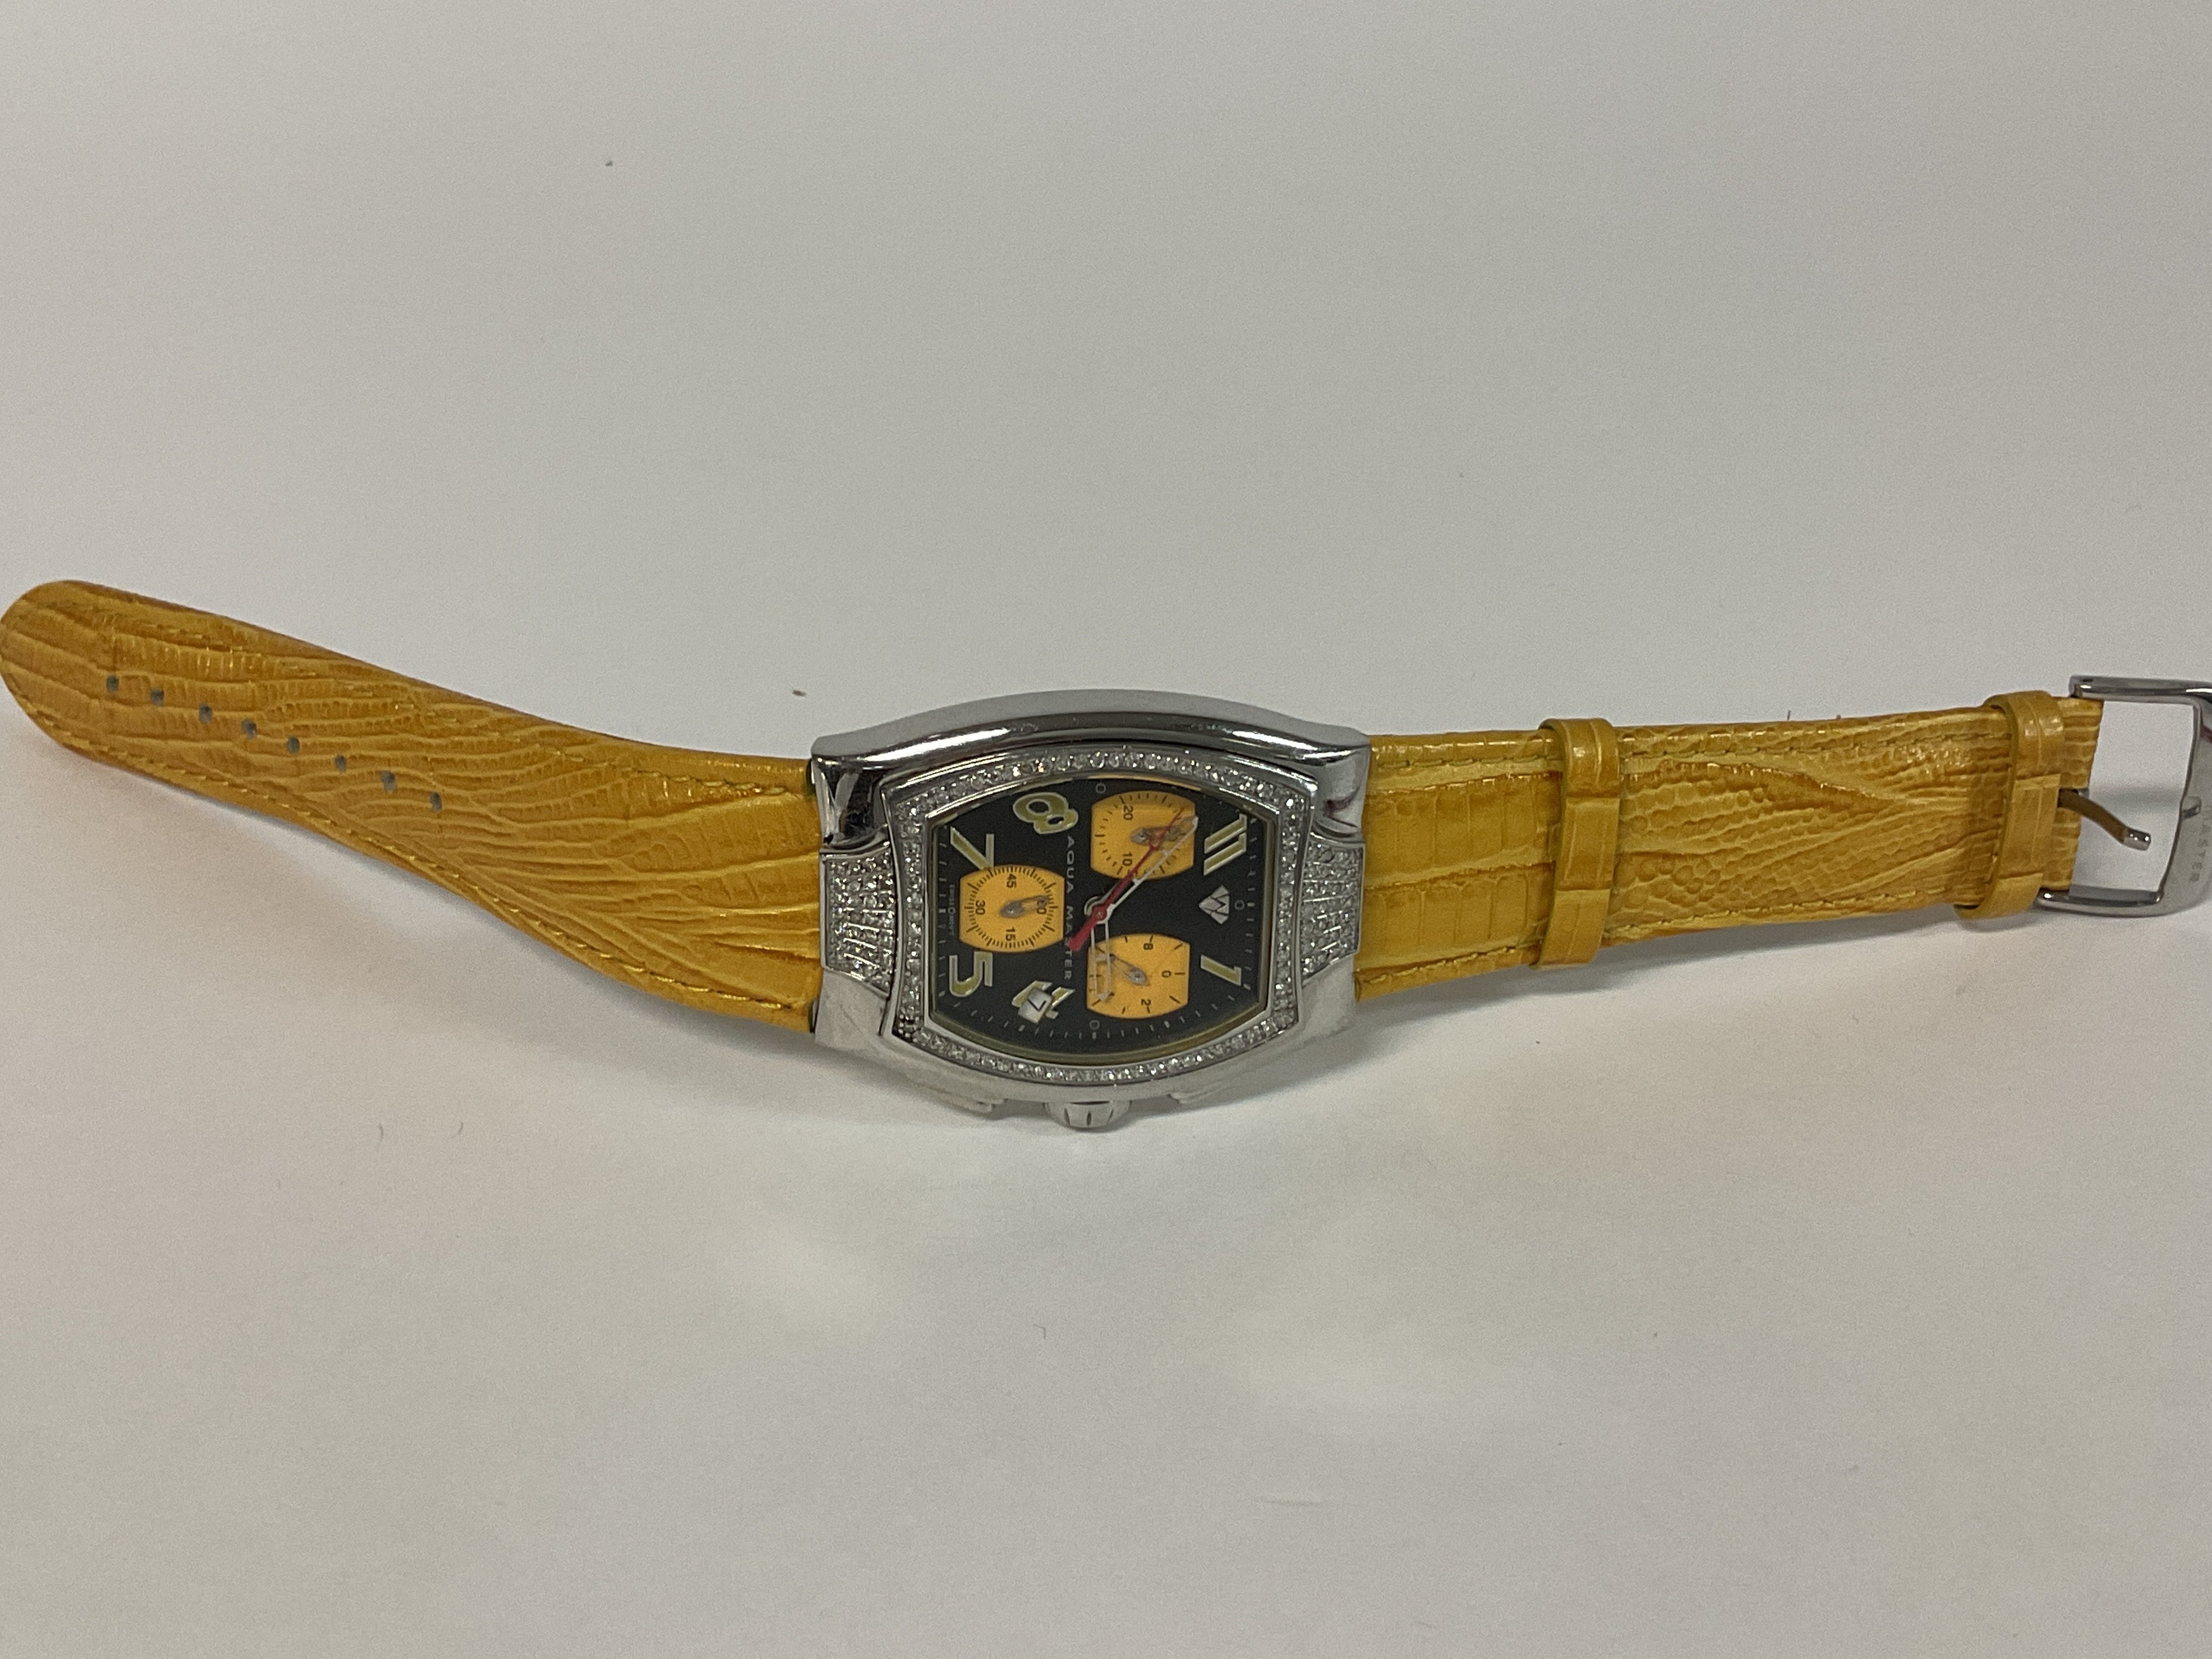 An Aqua Master multi diamond set watch (seen worki